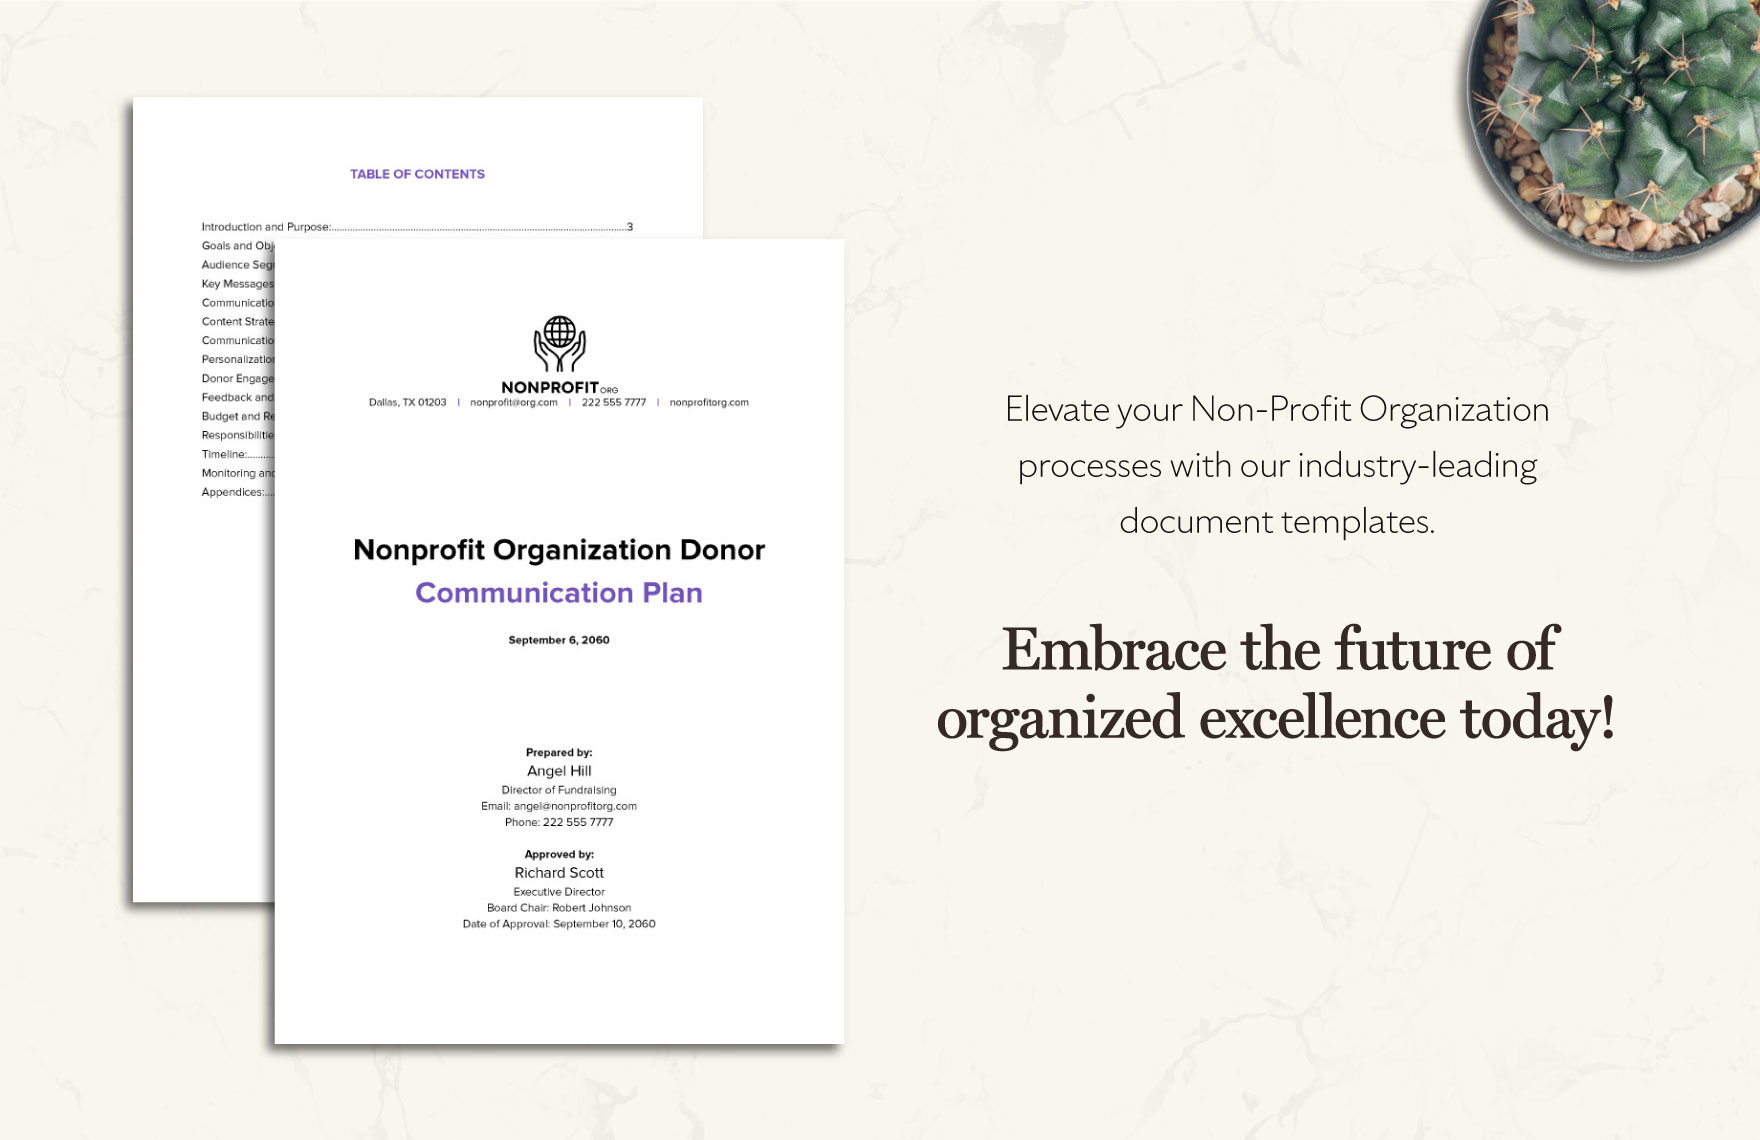 Nonprofit Organization Donor Communication Plan Template